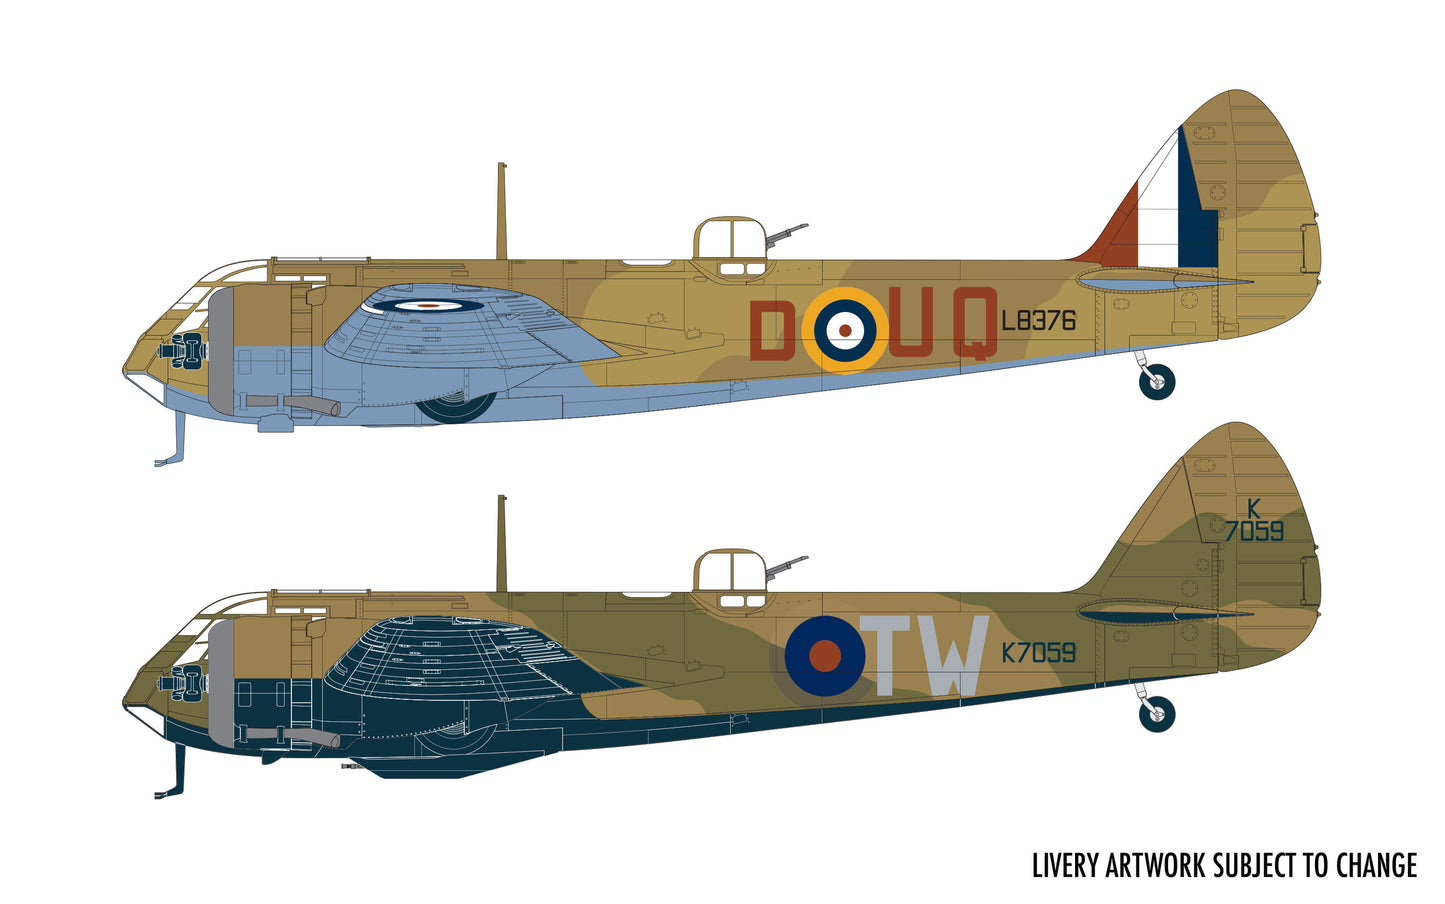 Airfix 1/48th scale Bristol Blenheim Mk.I